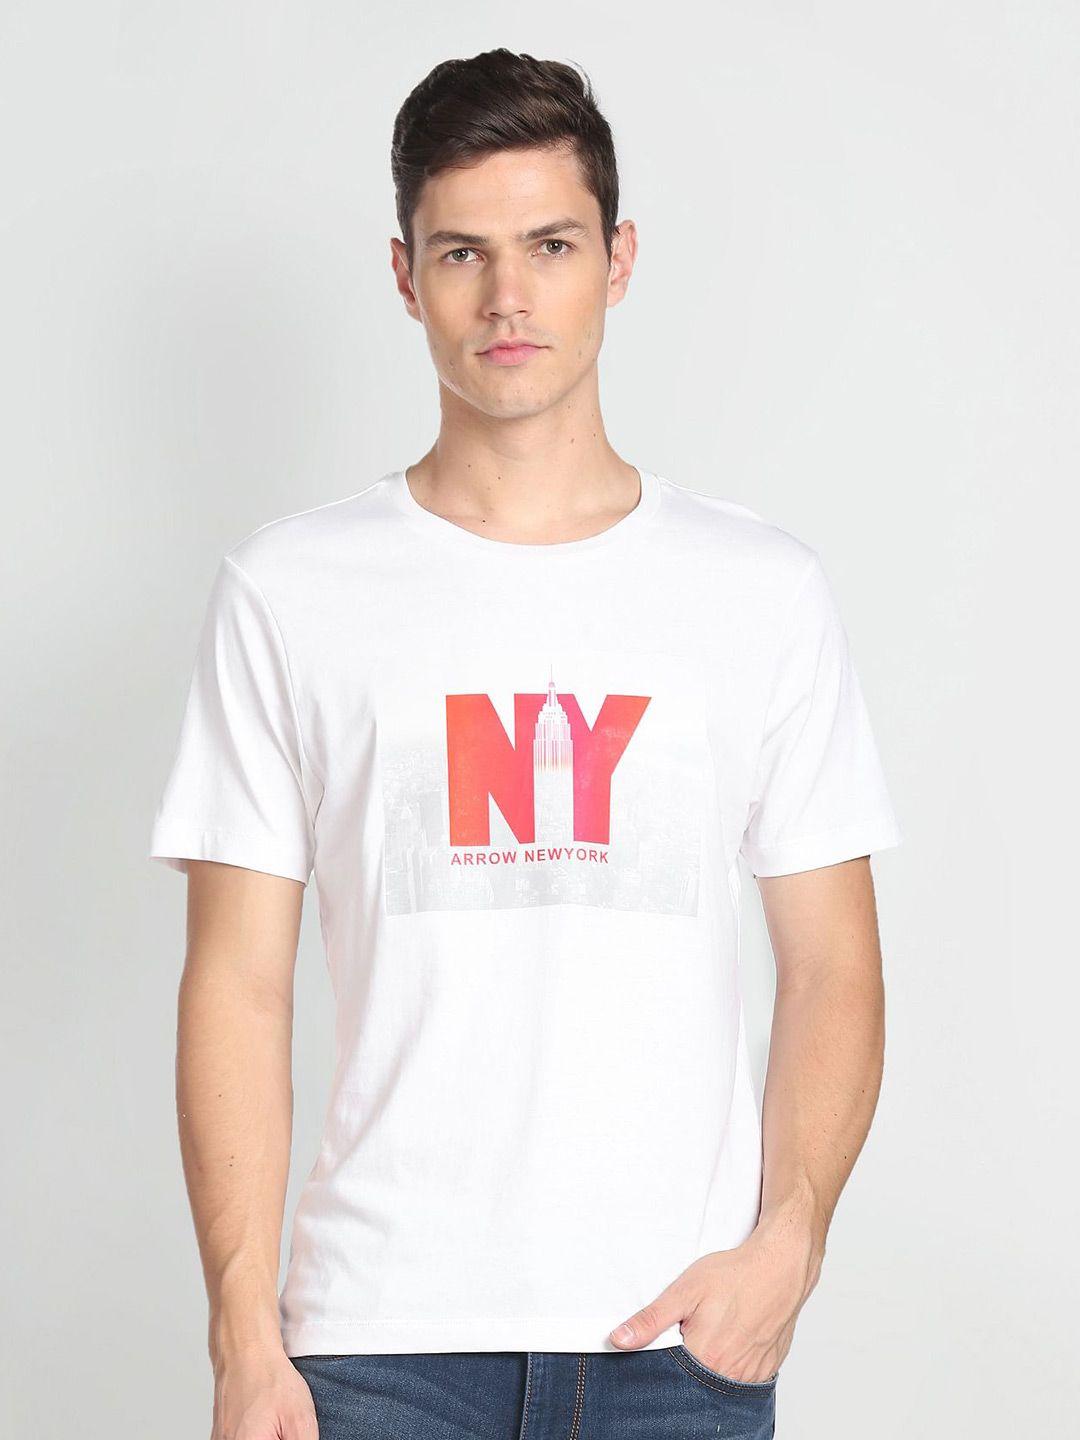 arrow new york typography printed round neck pure cotton t-shirt